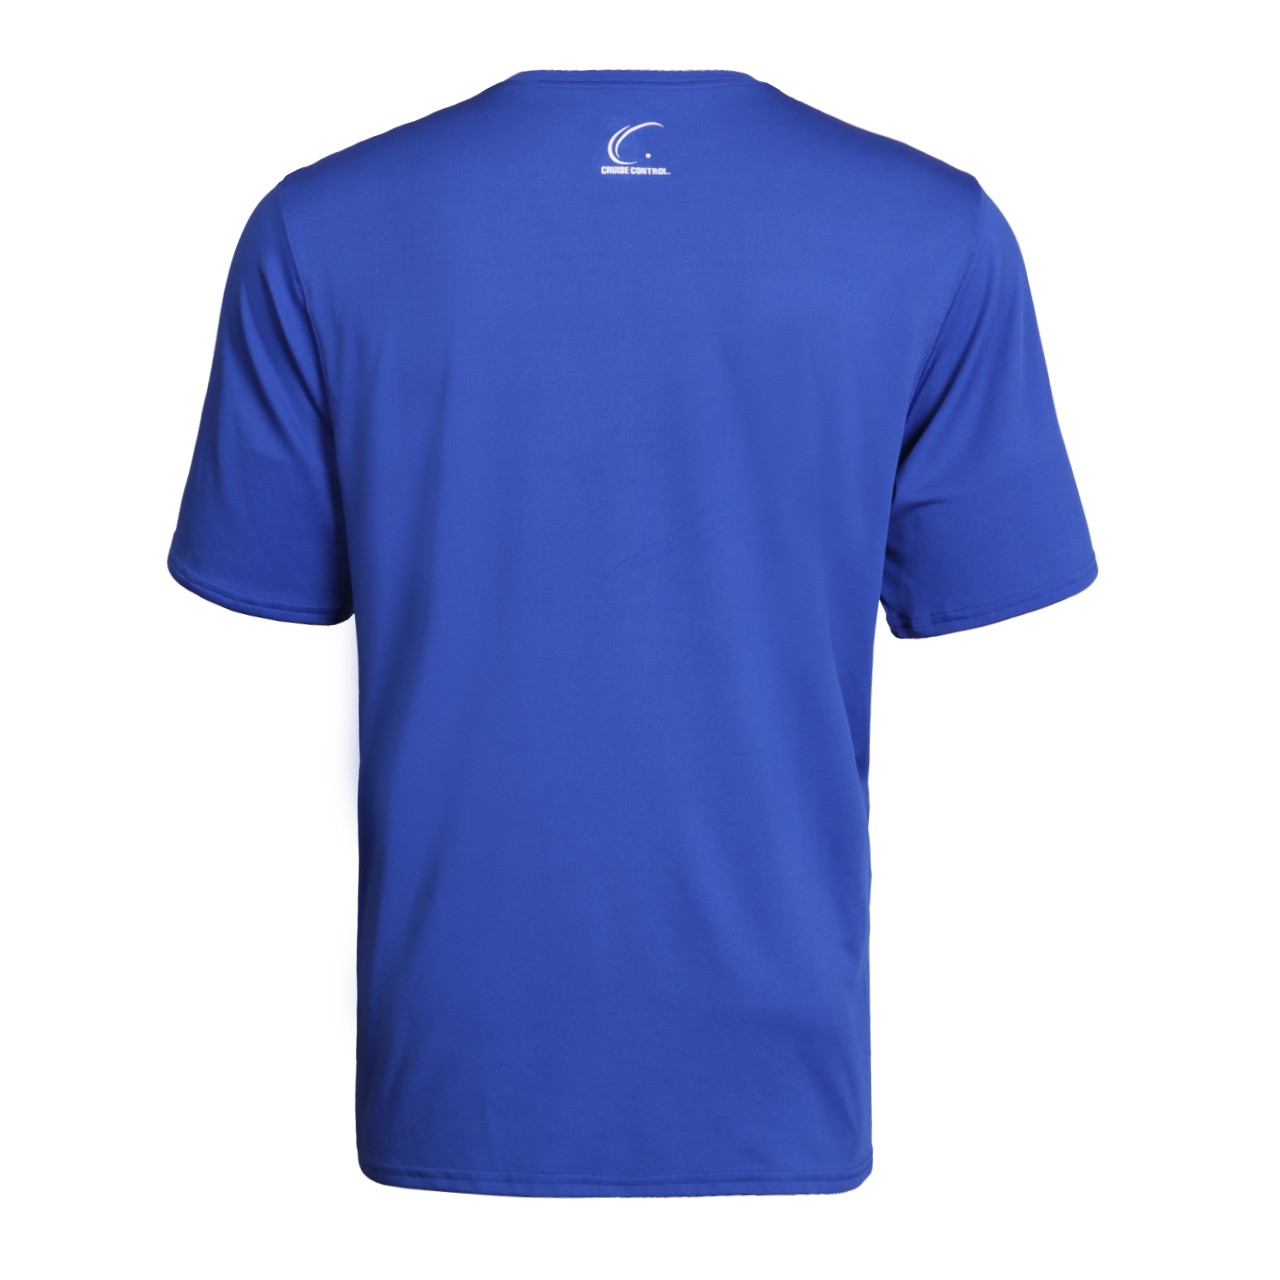 Men's Royal Blue Tennis Shirt | Cruise Control Gear